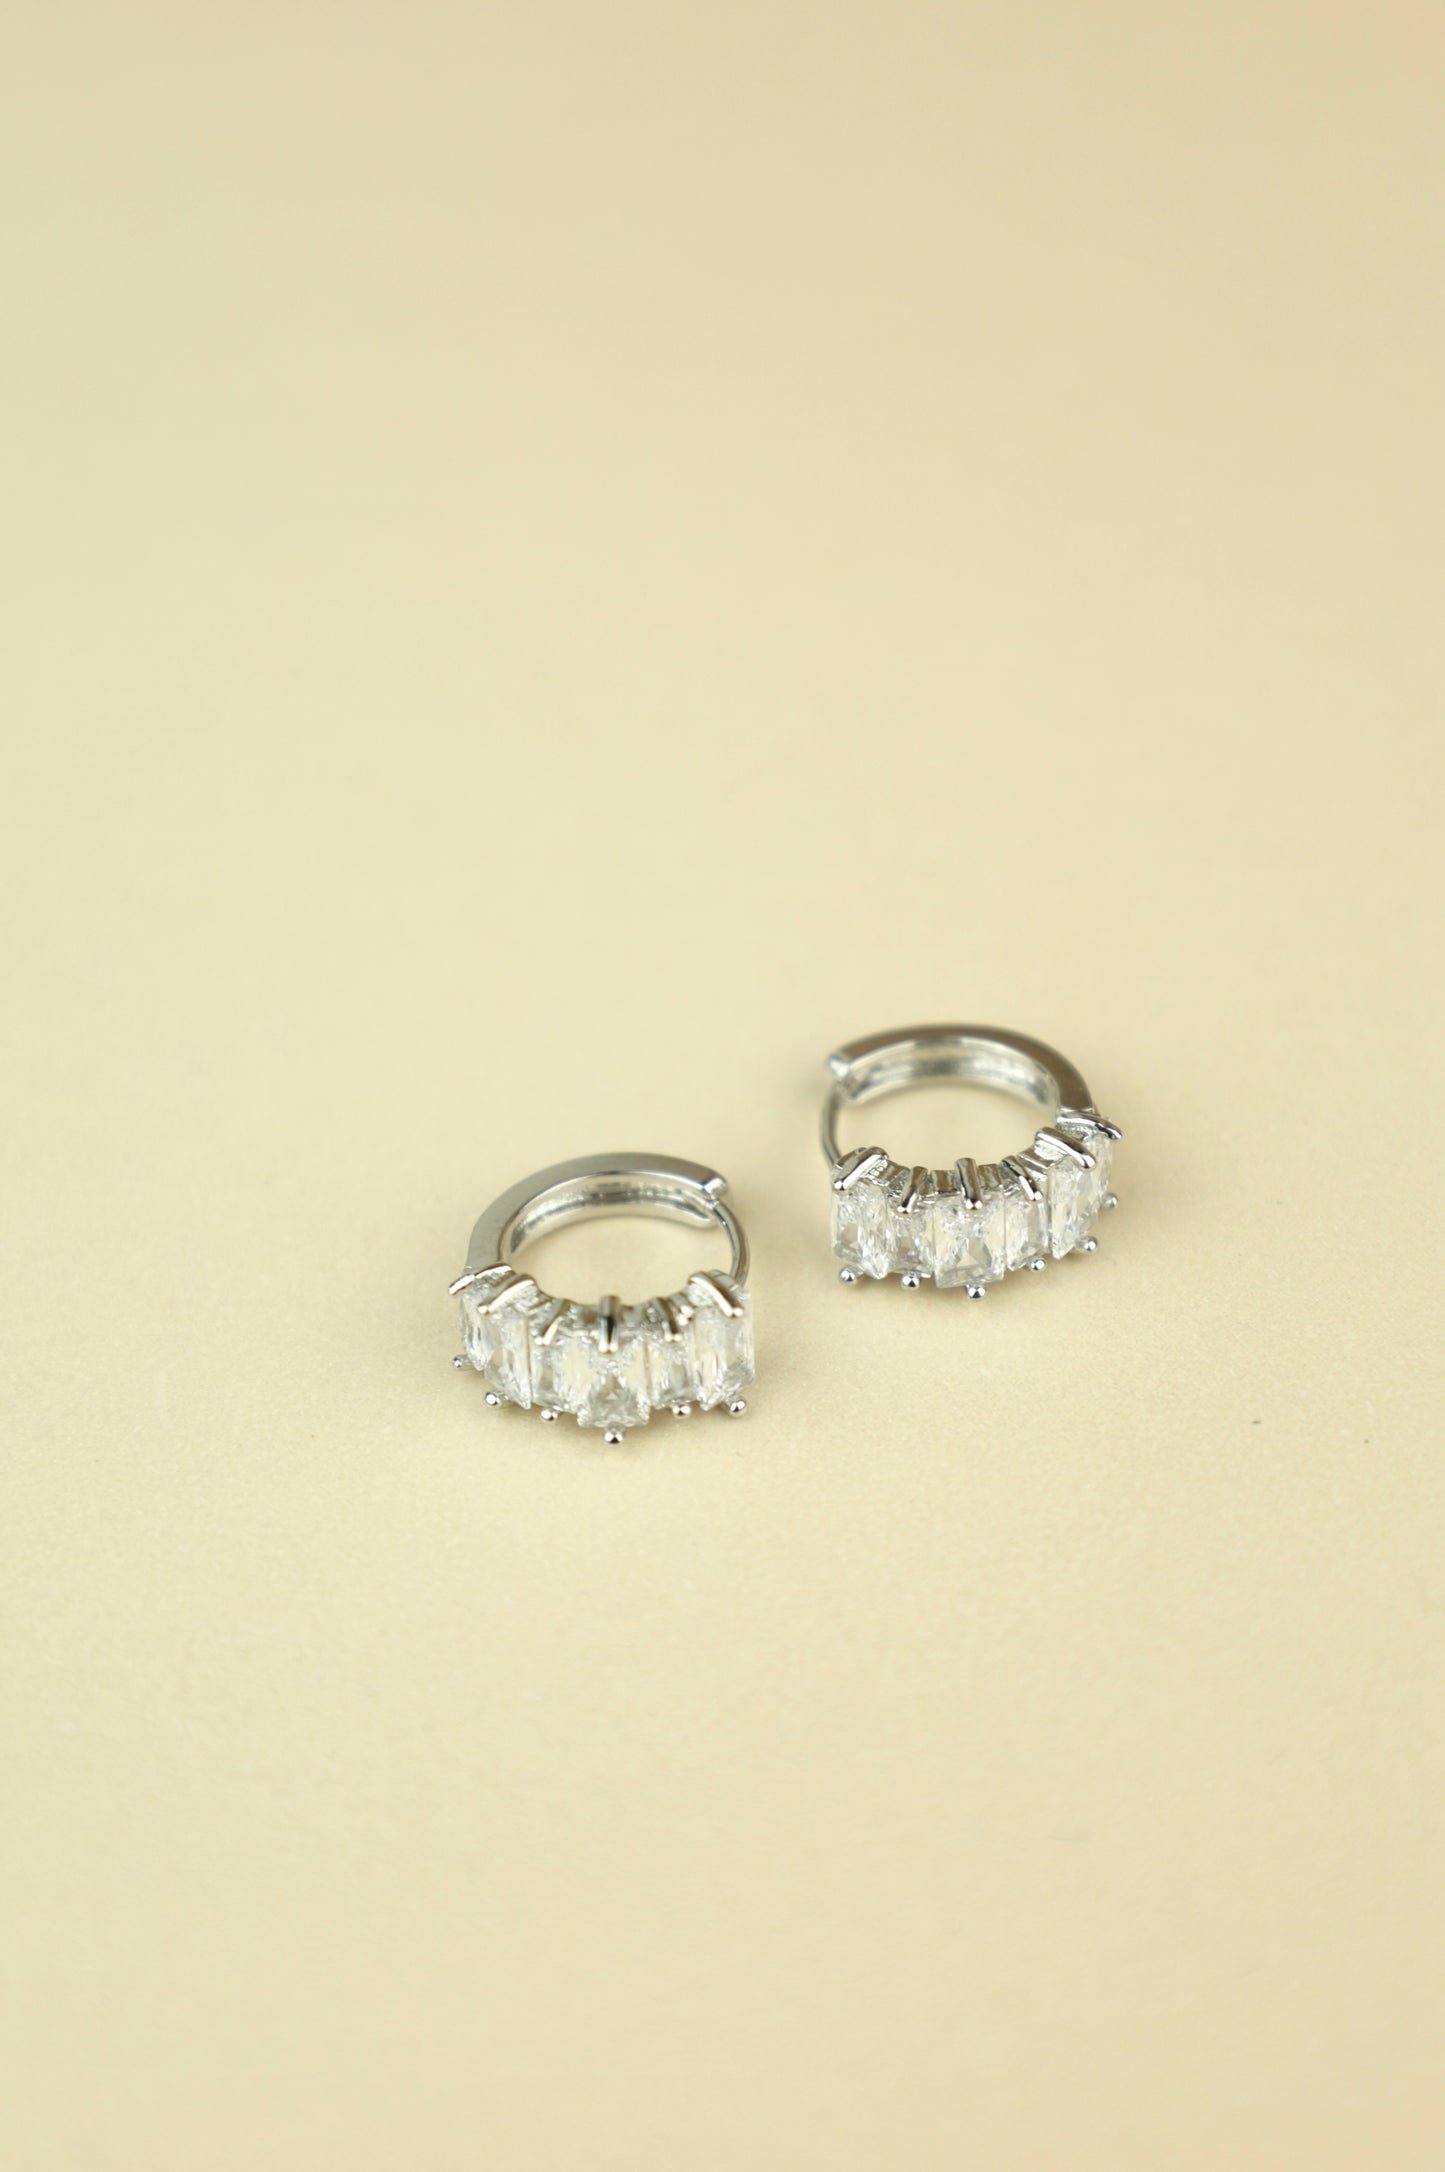 Hathor Baguette Earrings “Silver”